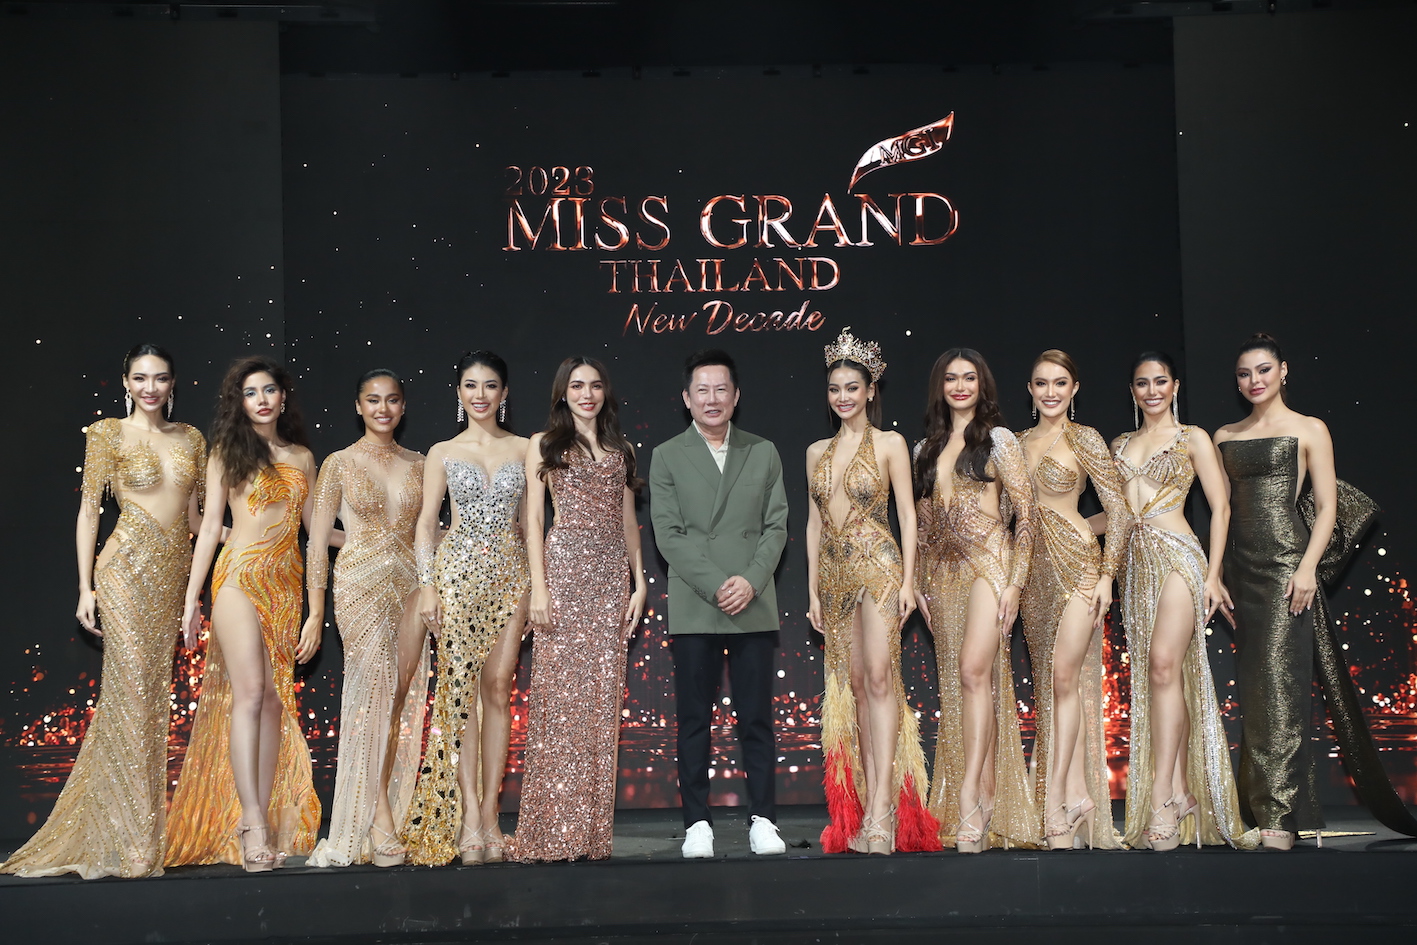 Road To Miss Grand Thailand 2023 หวยออก “เชียงใหม่” เจ้าภาพเก็บตัว “มิสแกรนด์  ไทยแลนด์ 2023” “ณวัฒน์” จัดหนัก เปิดตัว “น้องฉัตร” Make Up Artist Director  ประจำกอง – ICOLUMNIST.CO